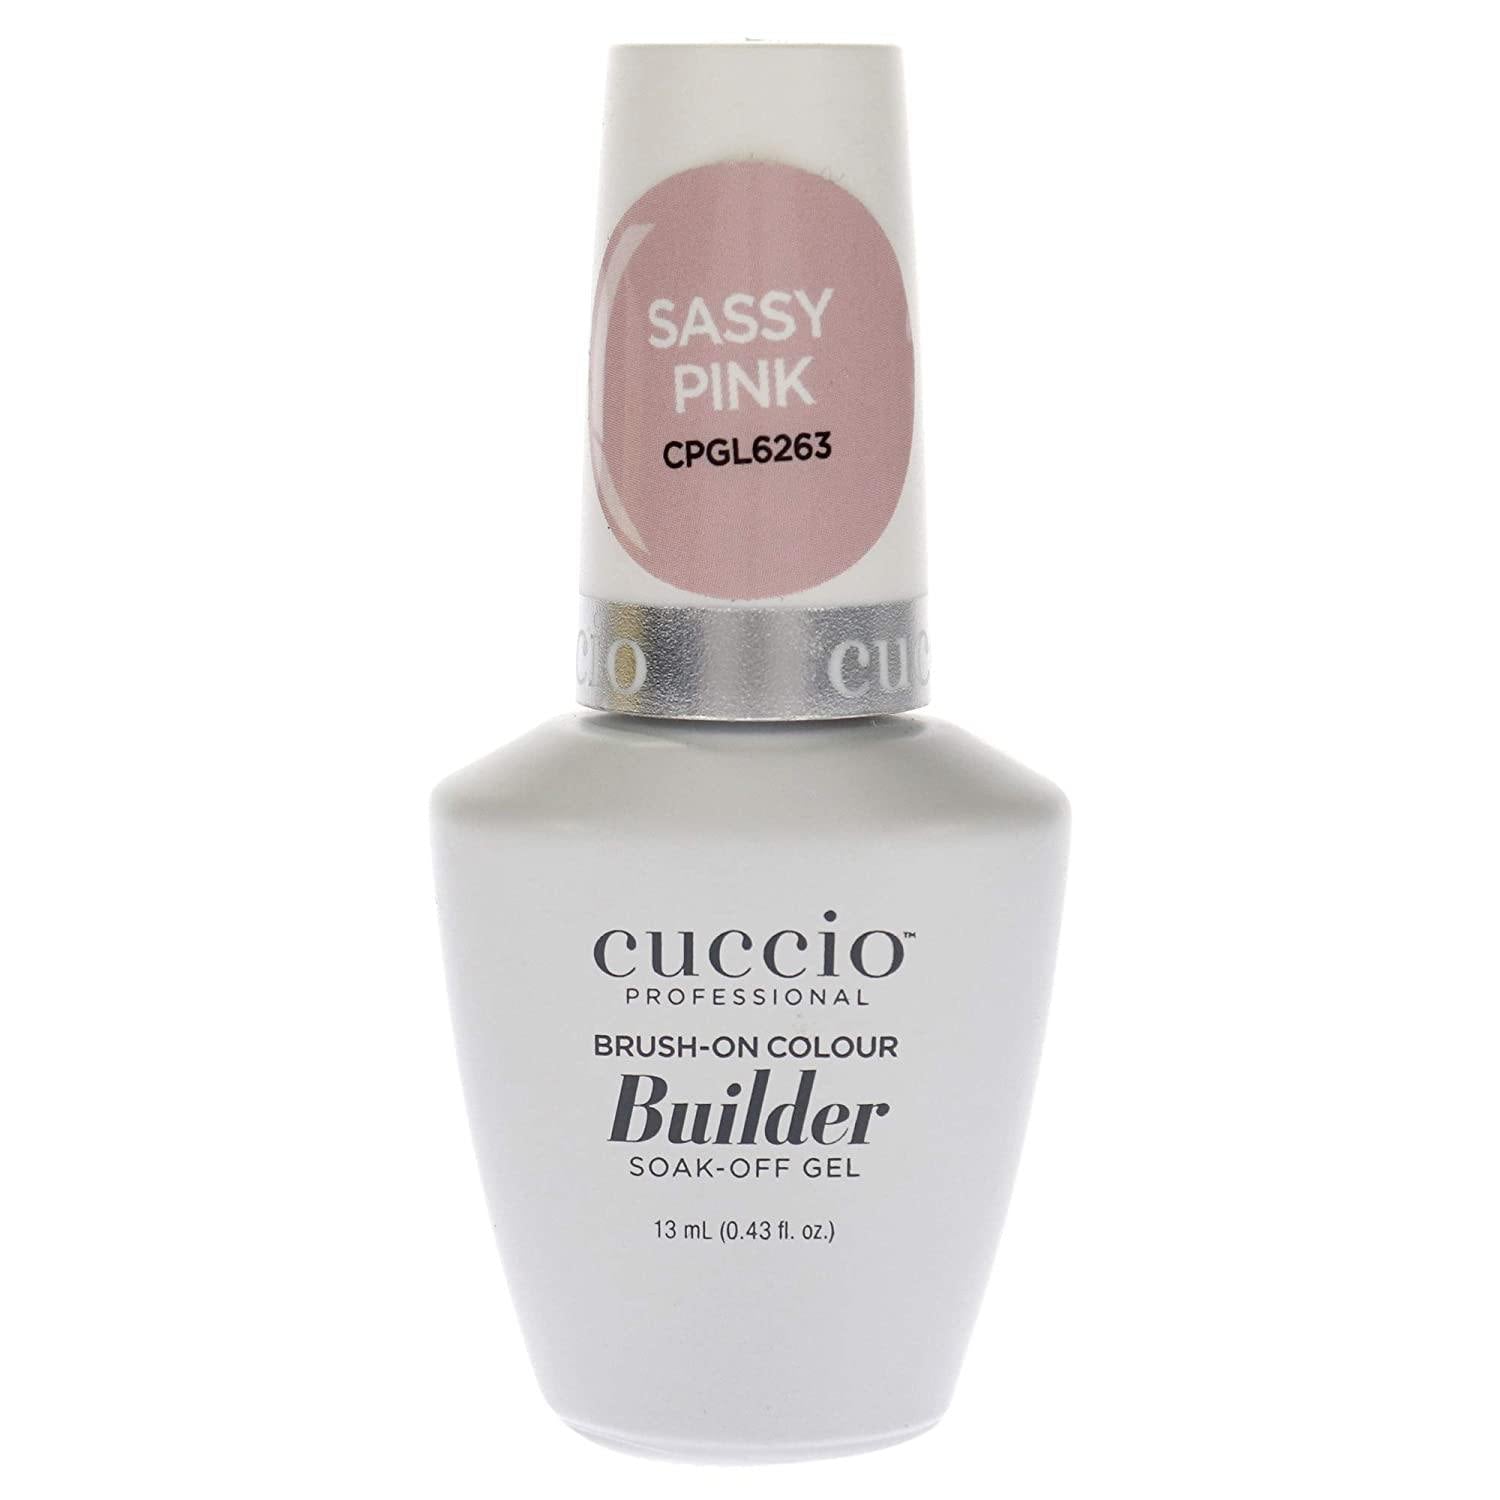 CUCCIO PRO BRUSH-ON COLOUR BUILDER GEL 15 ml - Sassy Pink - Sanida Beauty